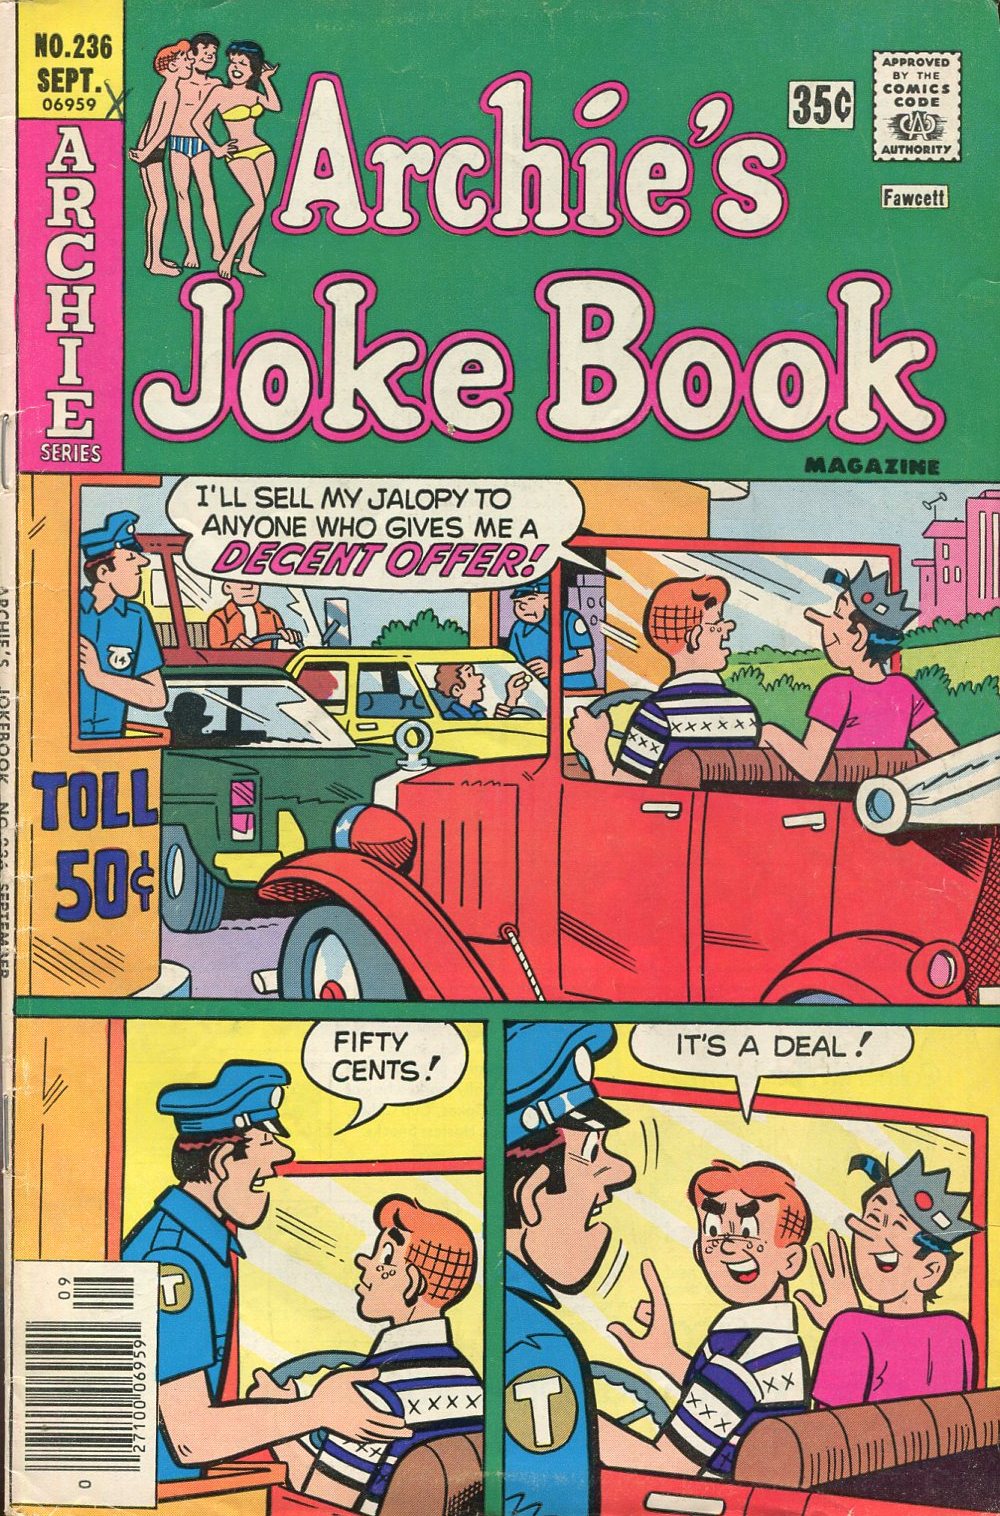 Archie's Joke Book Magazine 236 Page 1